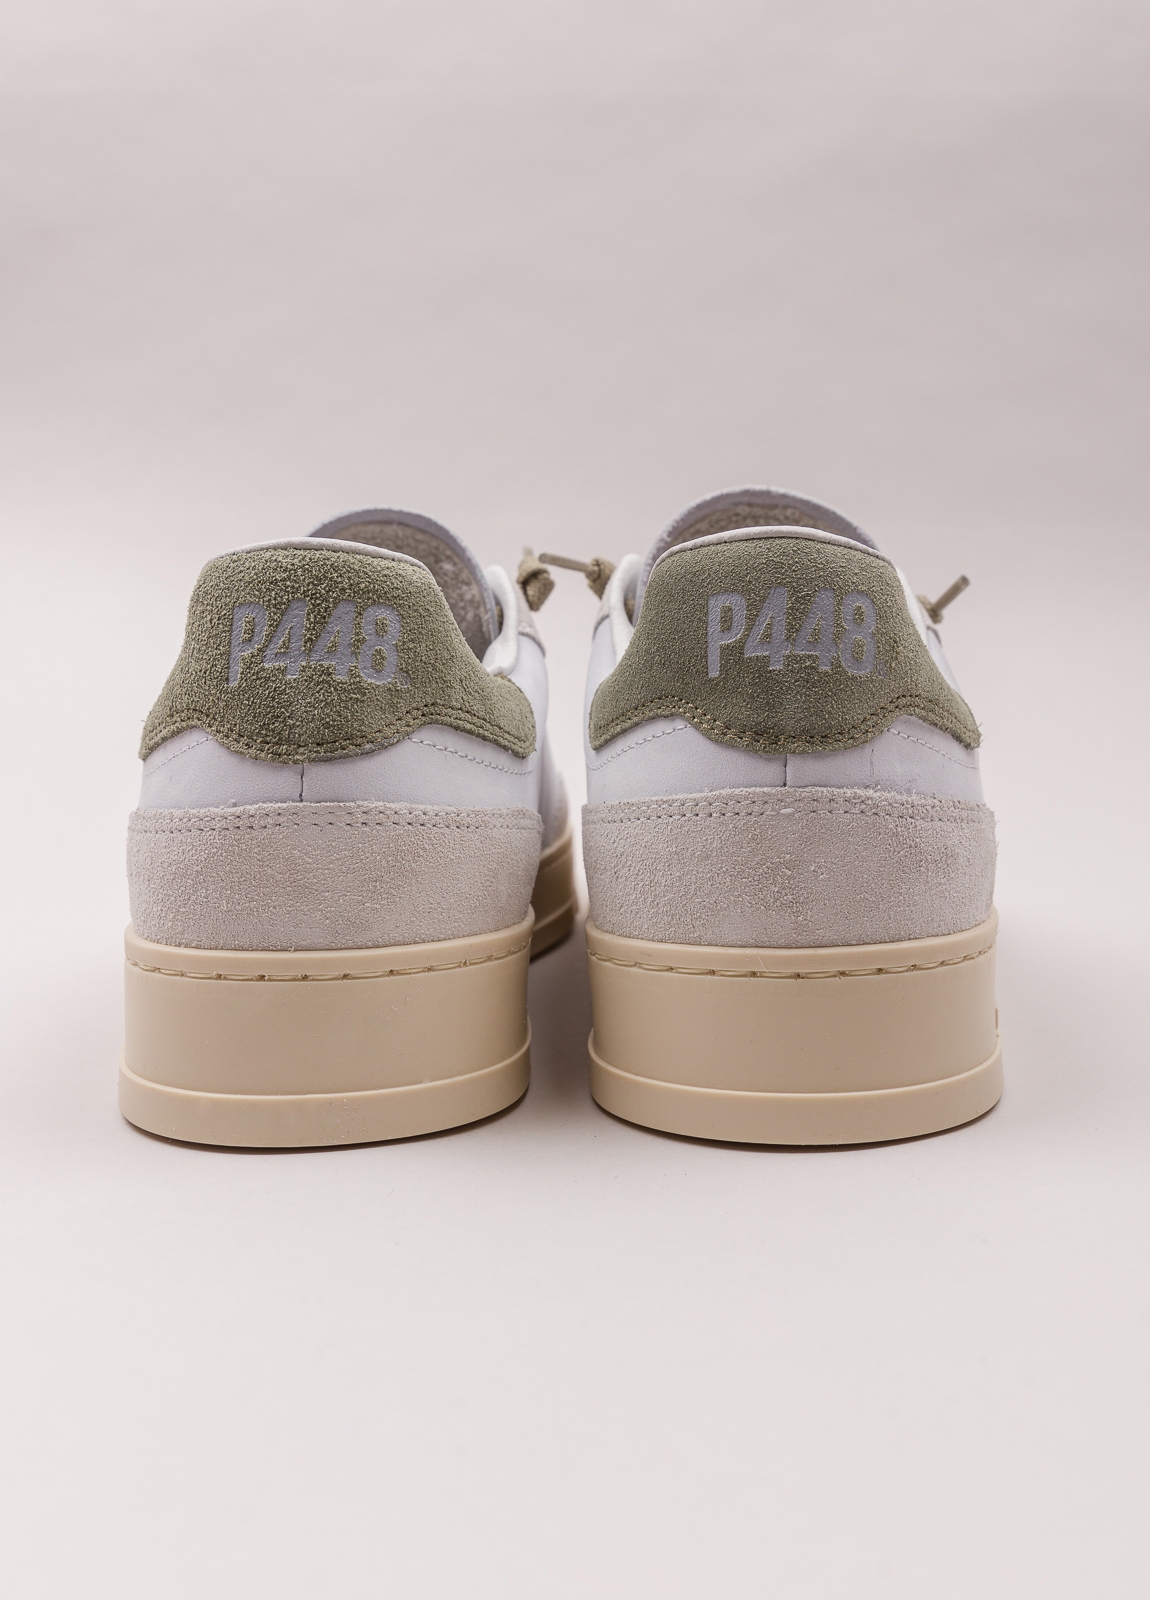 Sneaker P448 blanca y kaki - Ítem3